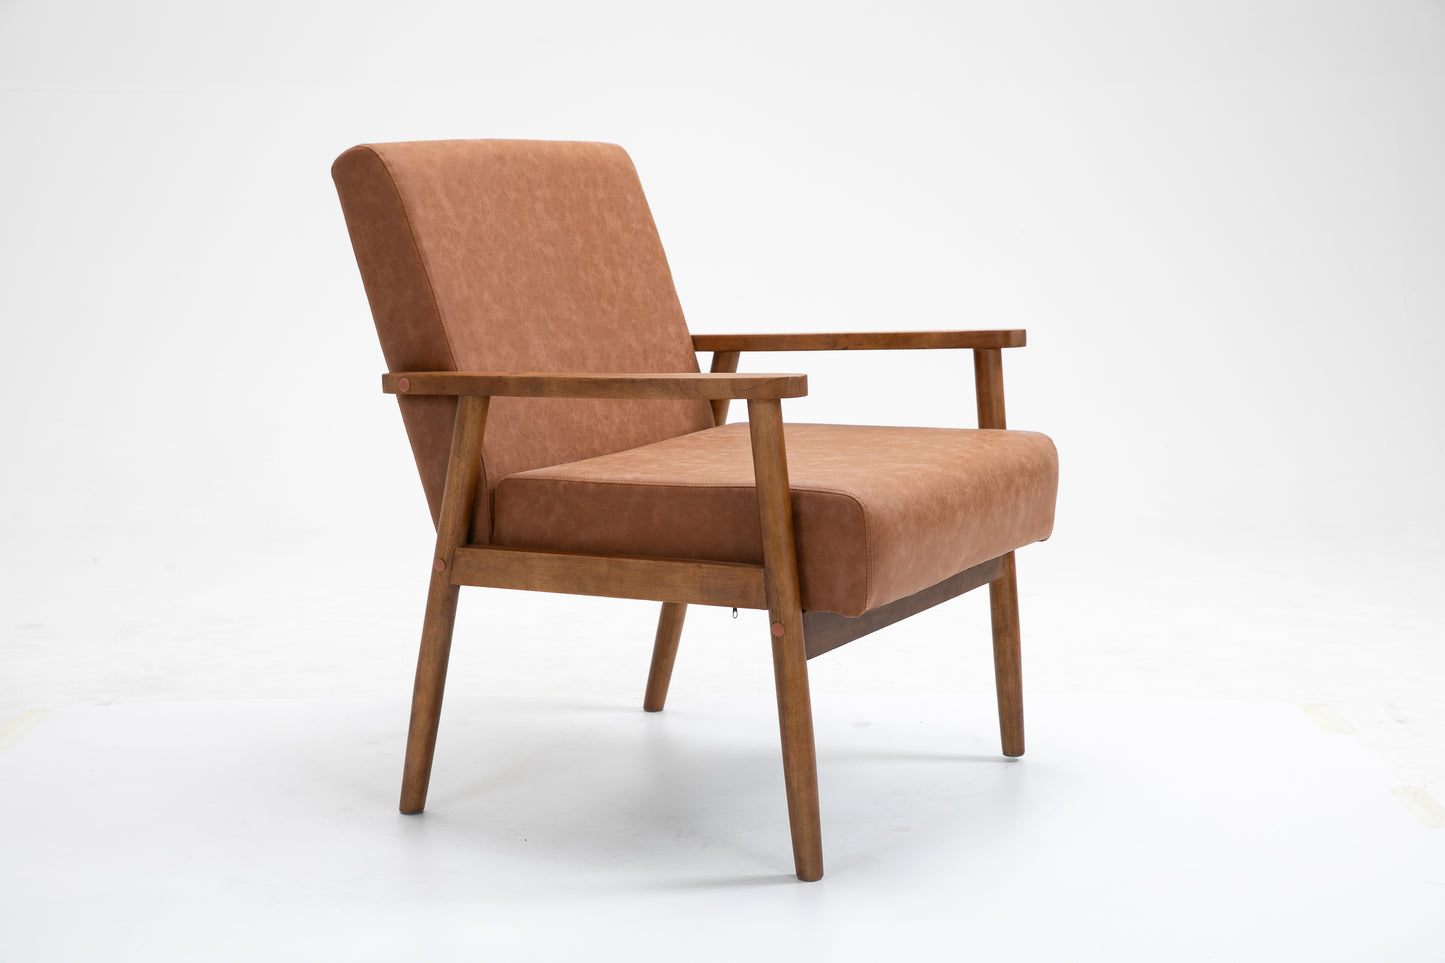 Solid wood vegan leather armchair set of 2 - Brown